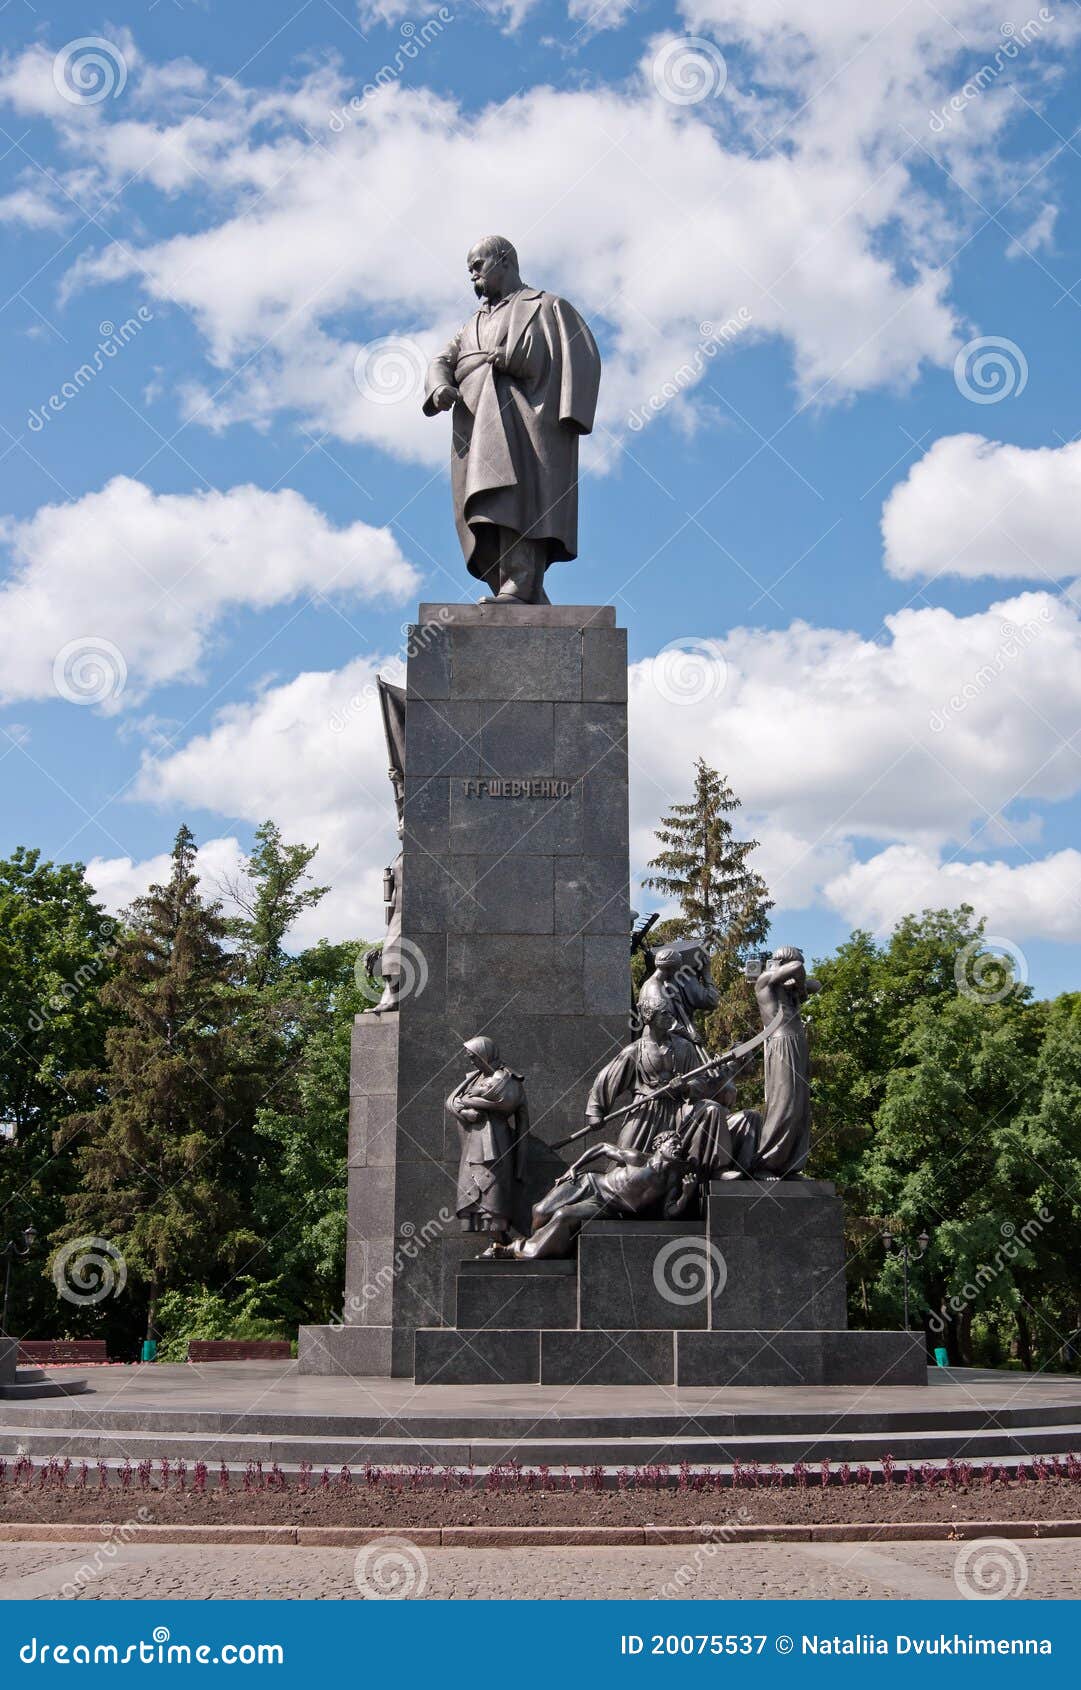 monument to taras shevchenko in kharkov, ukraine